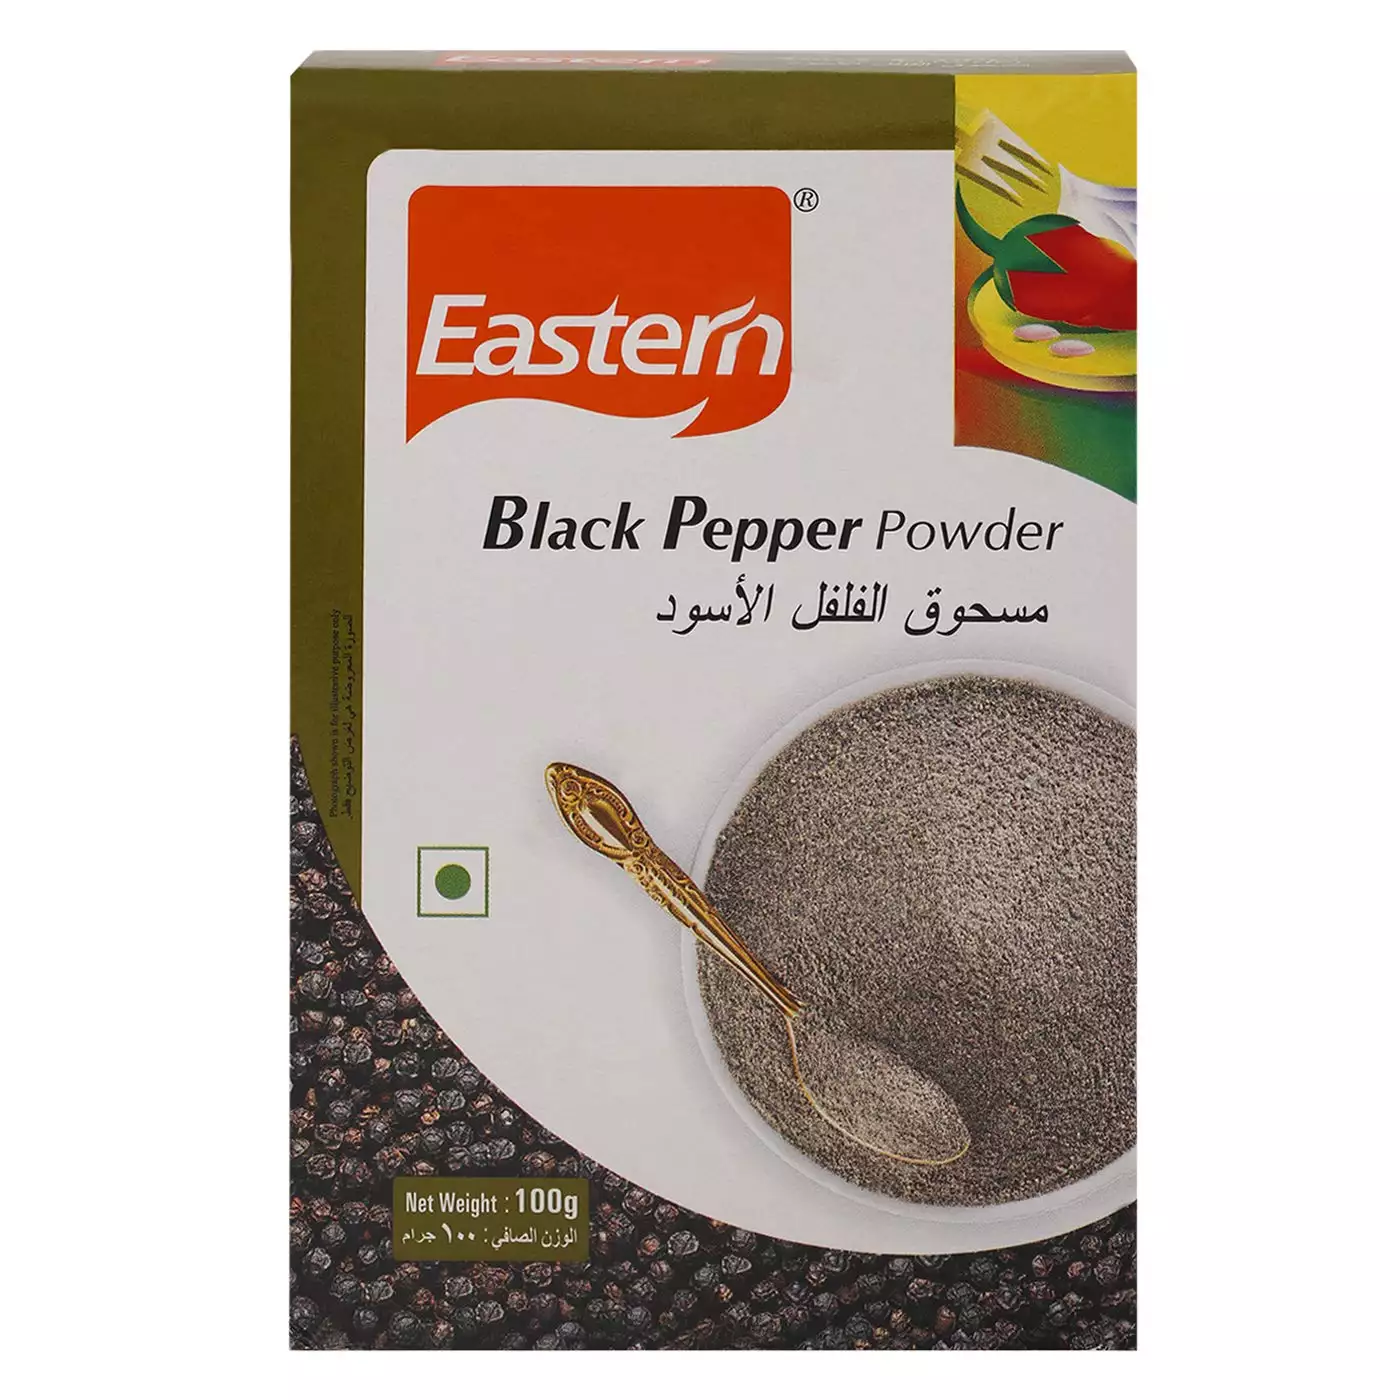 EASTERN BLACK PEPPER POWDER 100G